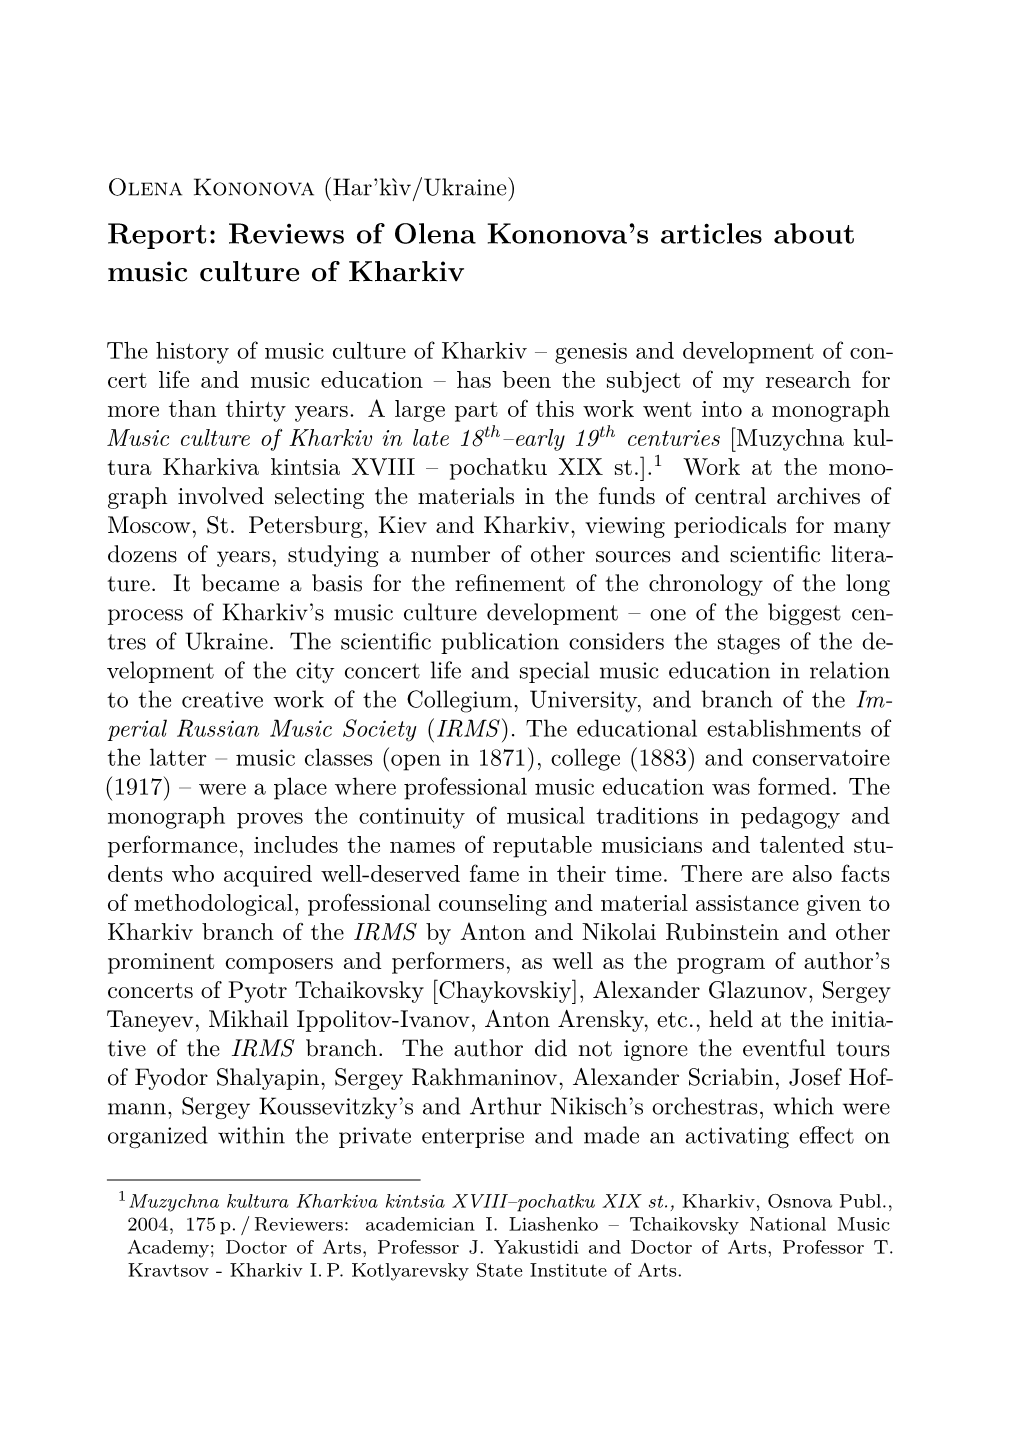 Reviews of Olena Kononova's Articles About Music Culture of Kharkiv